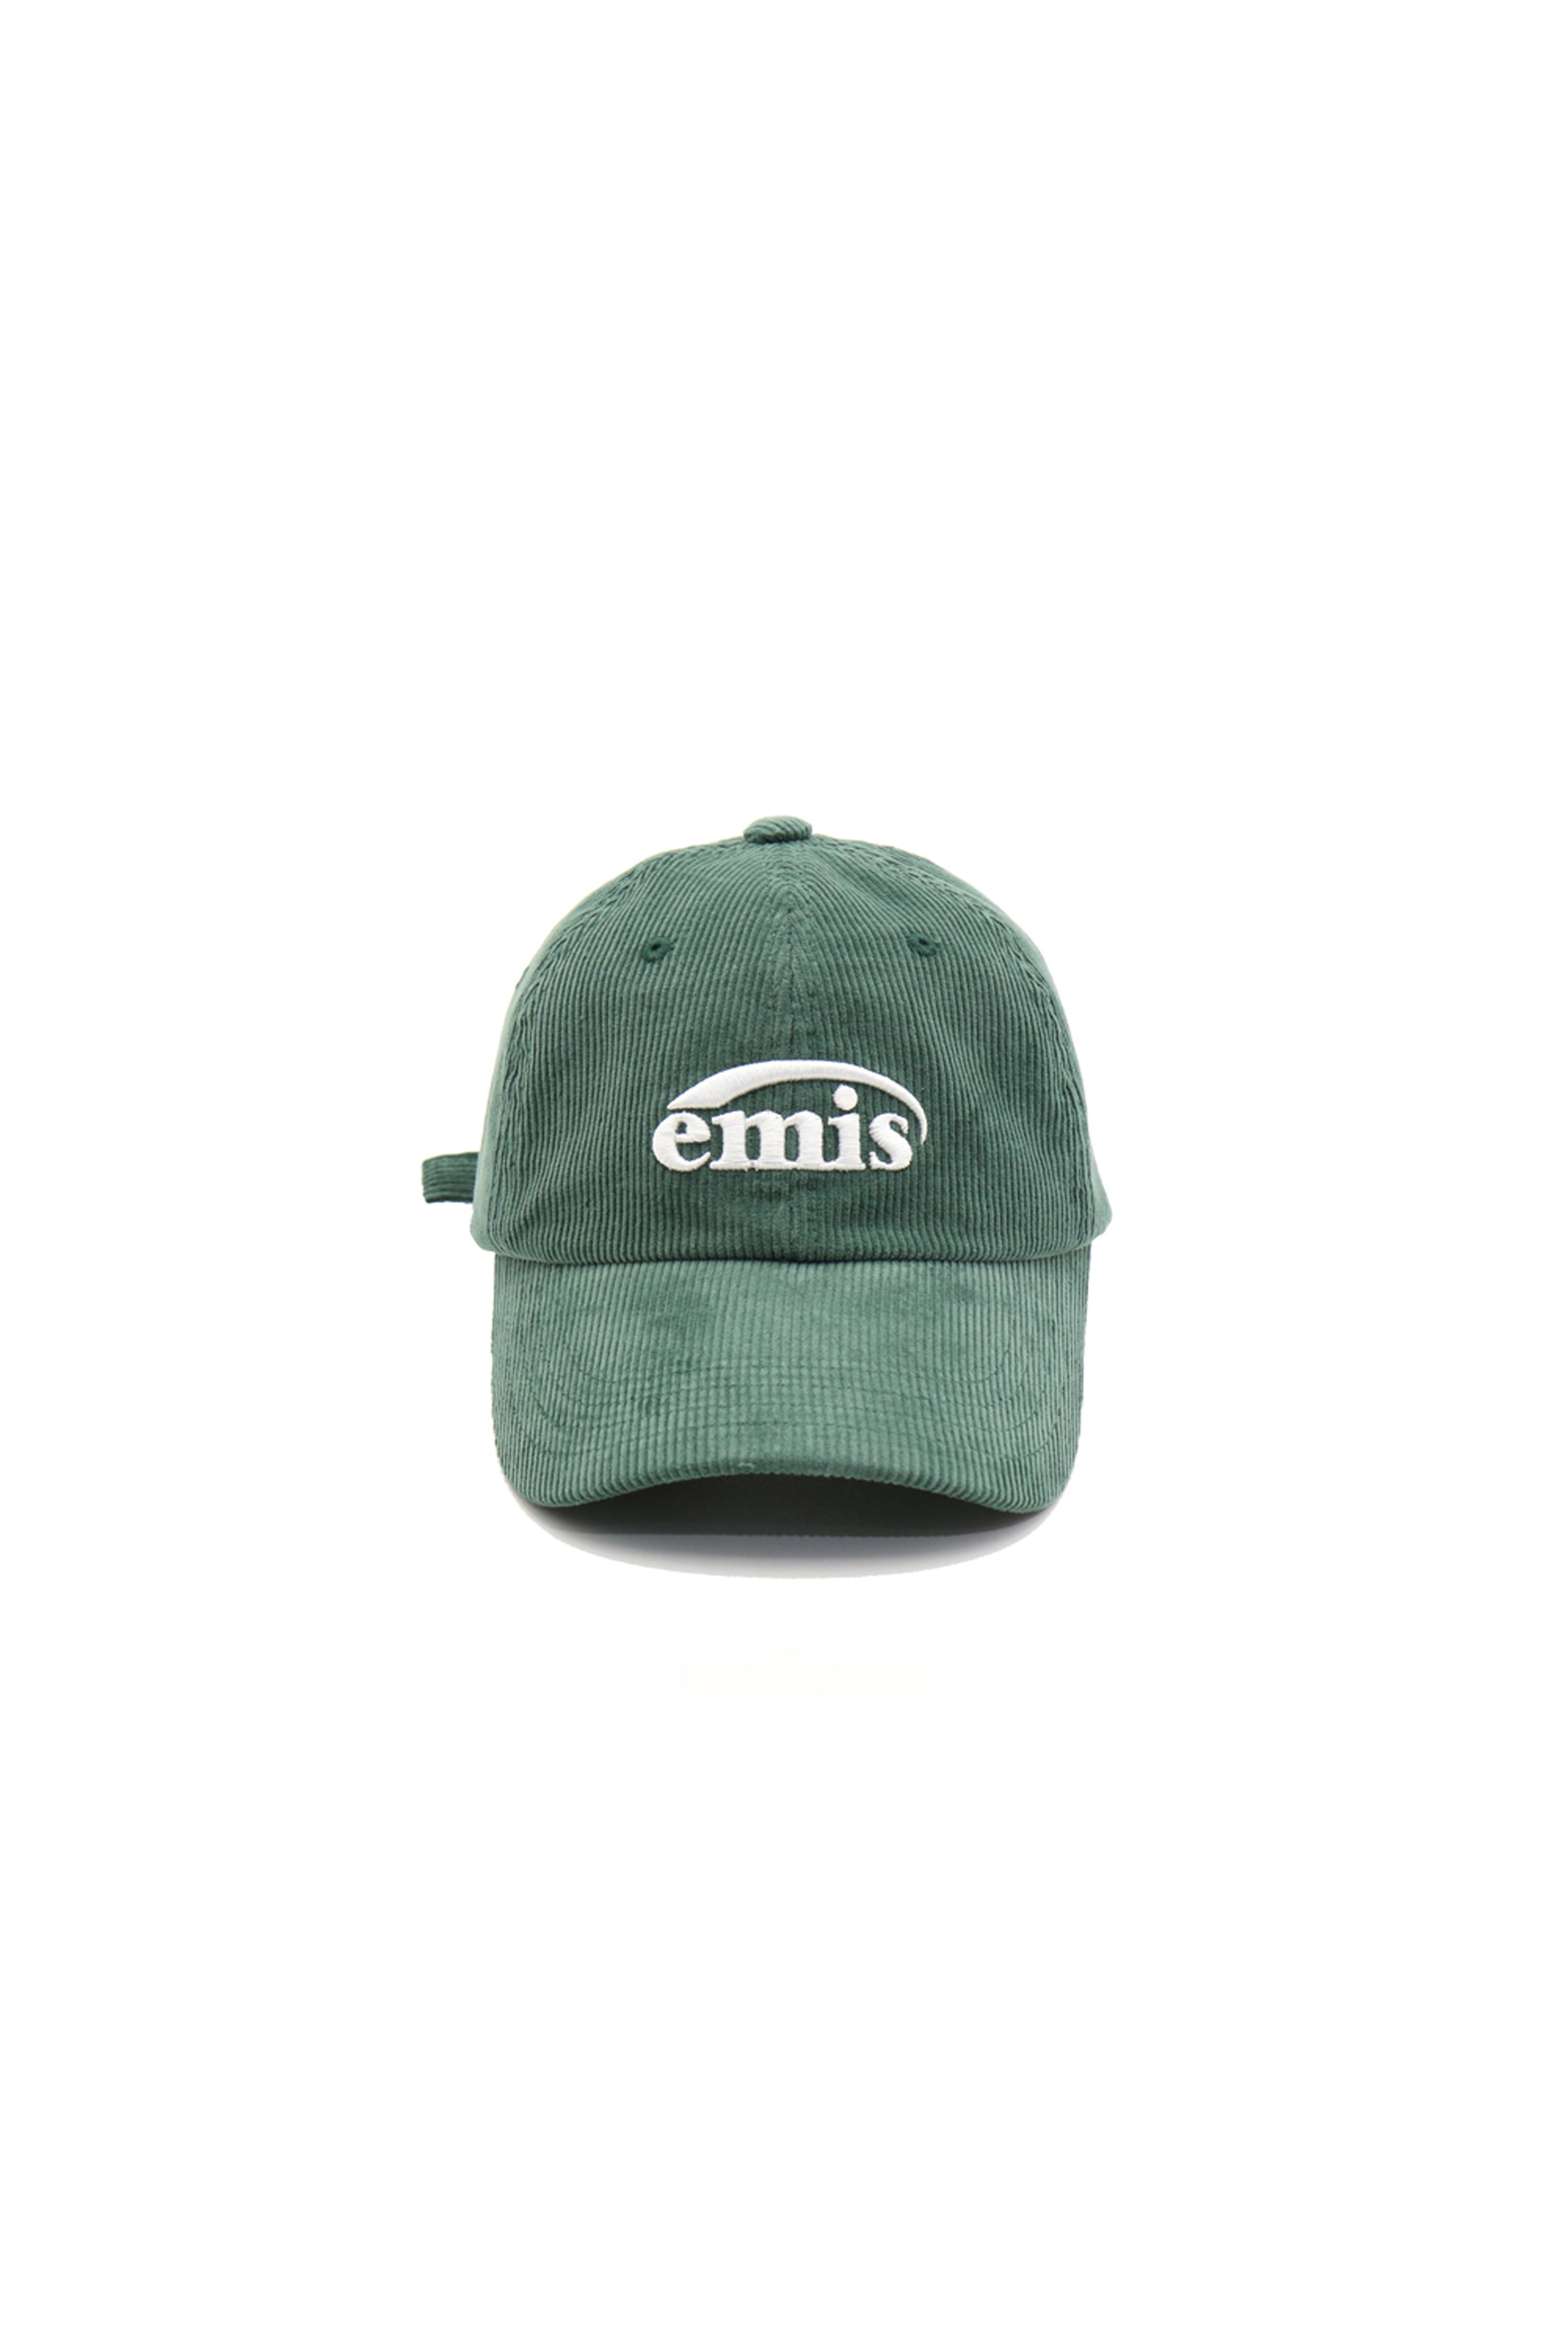 NEW LOGO CORDUROY EMIS CAP-GREEN